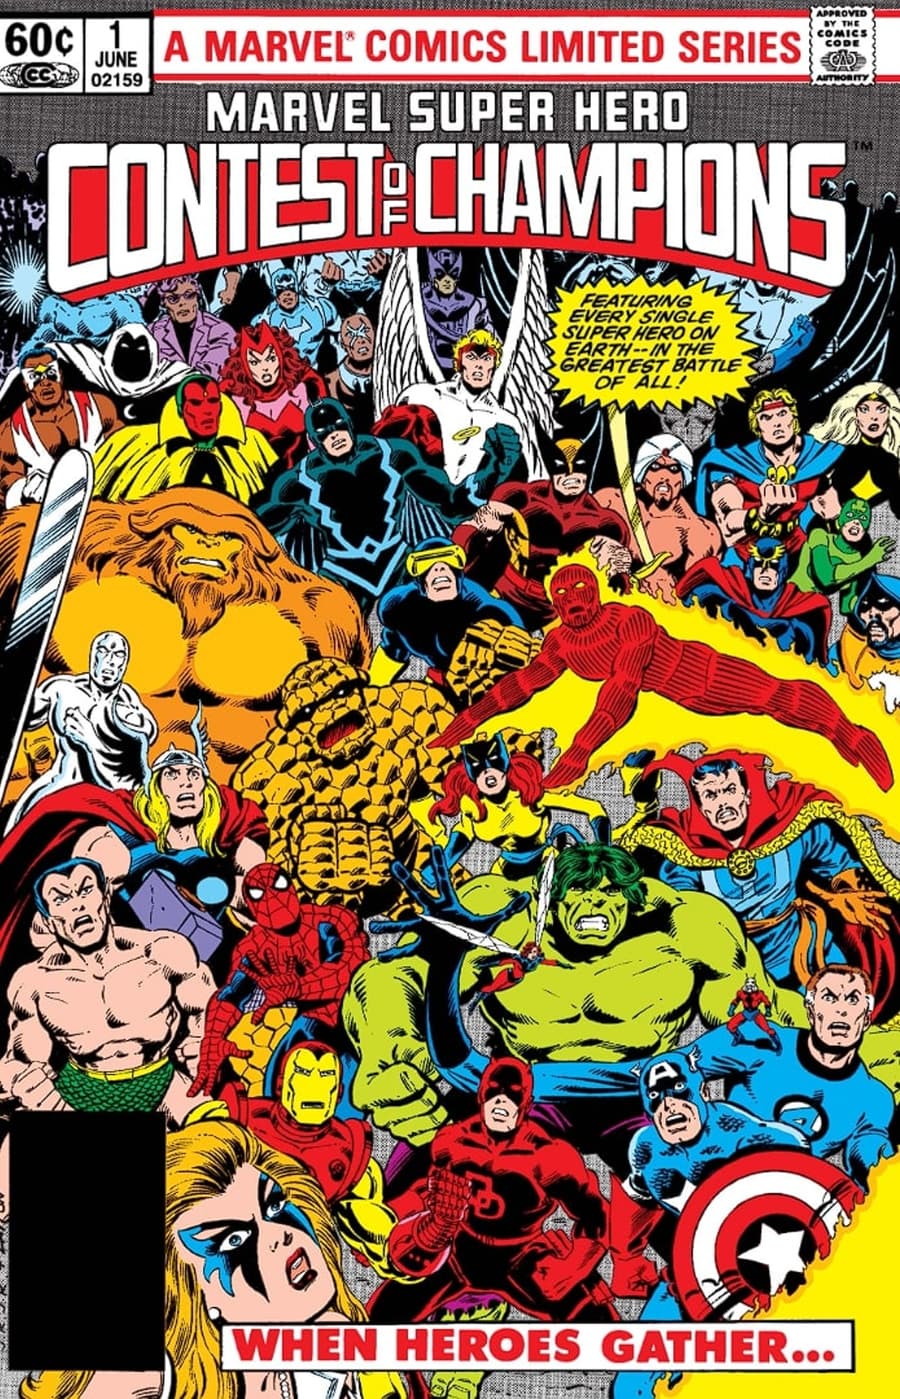 MARVEL SUPER HERO CONTEST OF CHAMPIONS (1982) #1 cover by John Romita Jr., Bob Layton, Christie Scheele, and Rick Parker